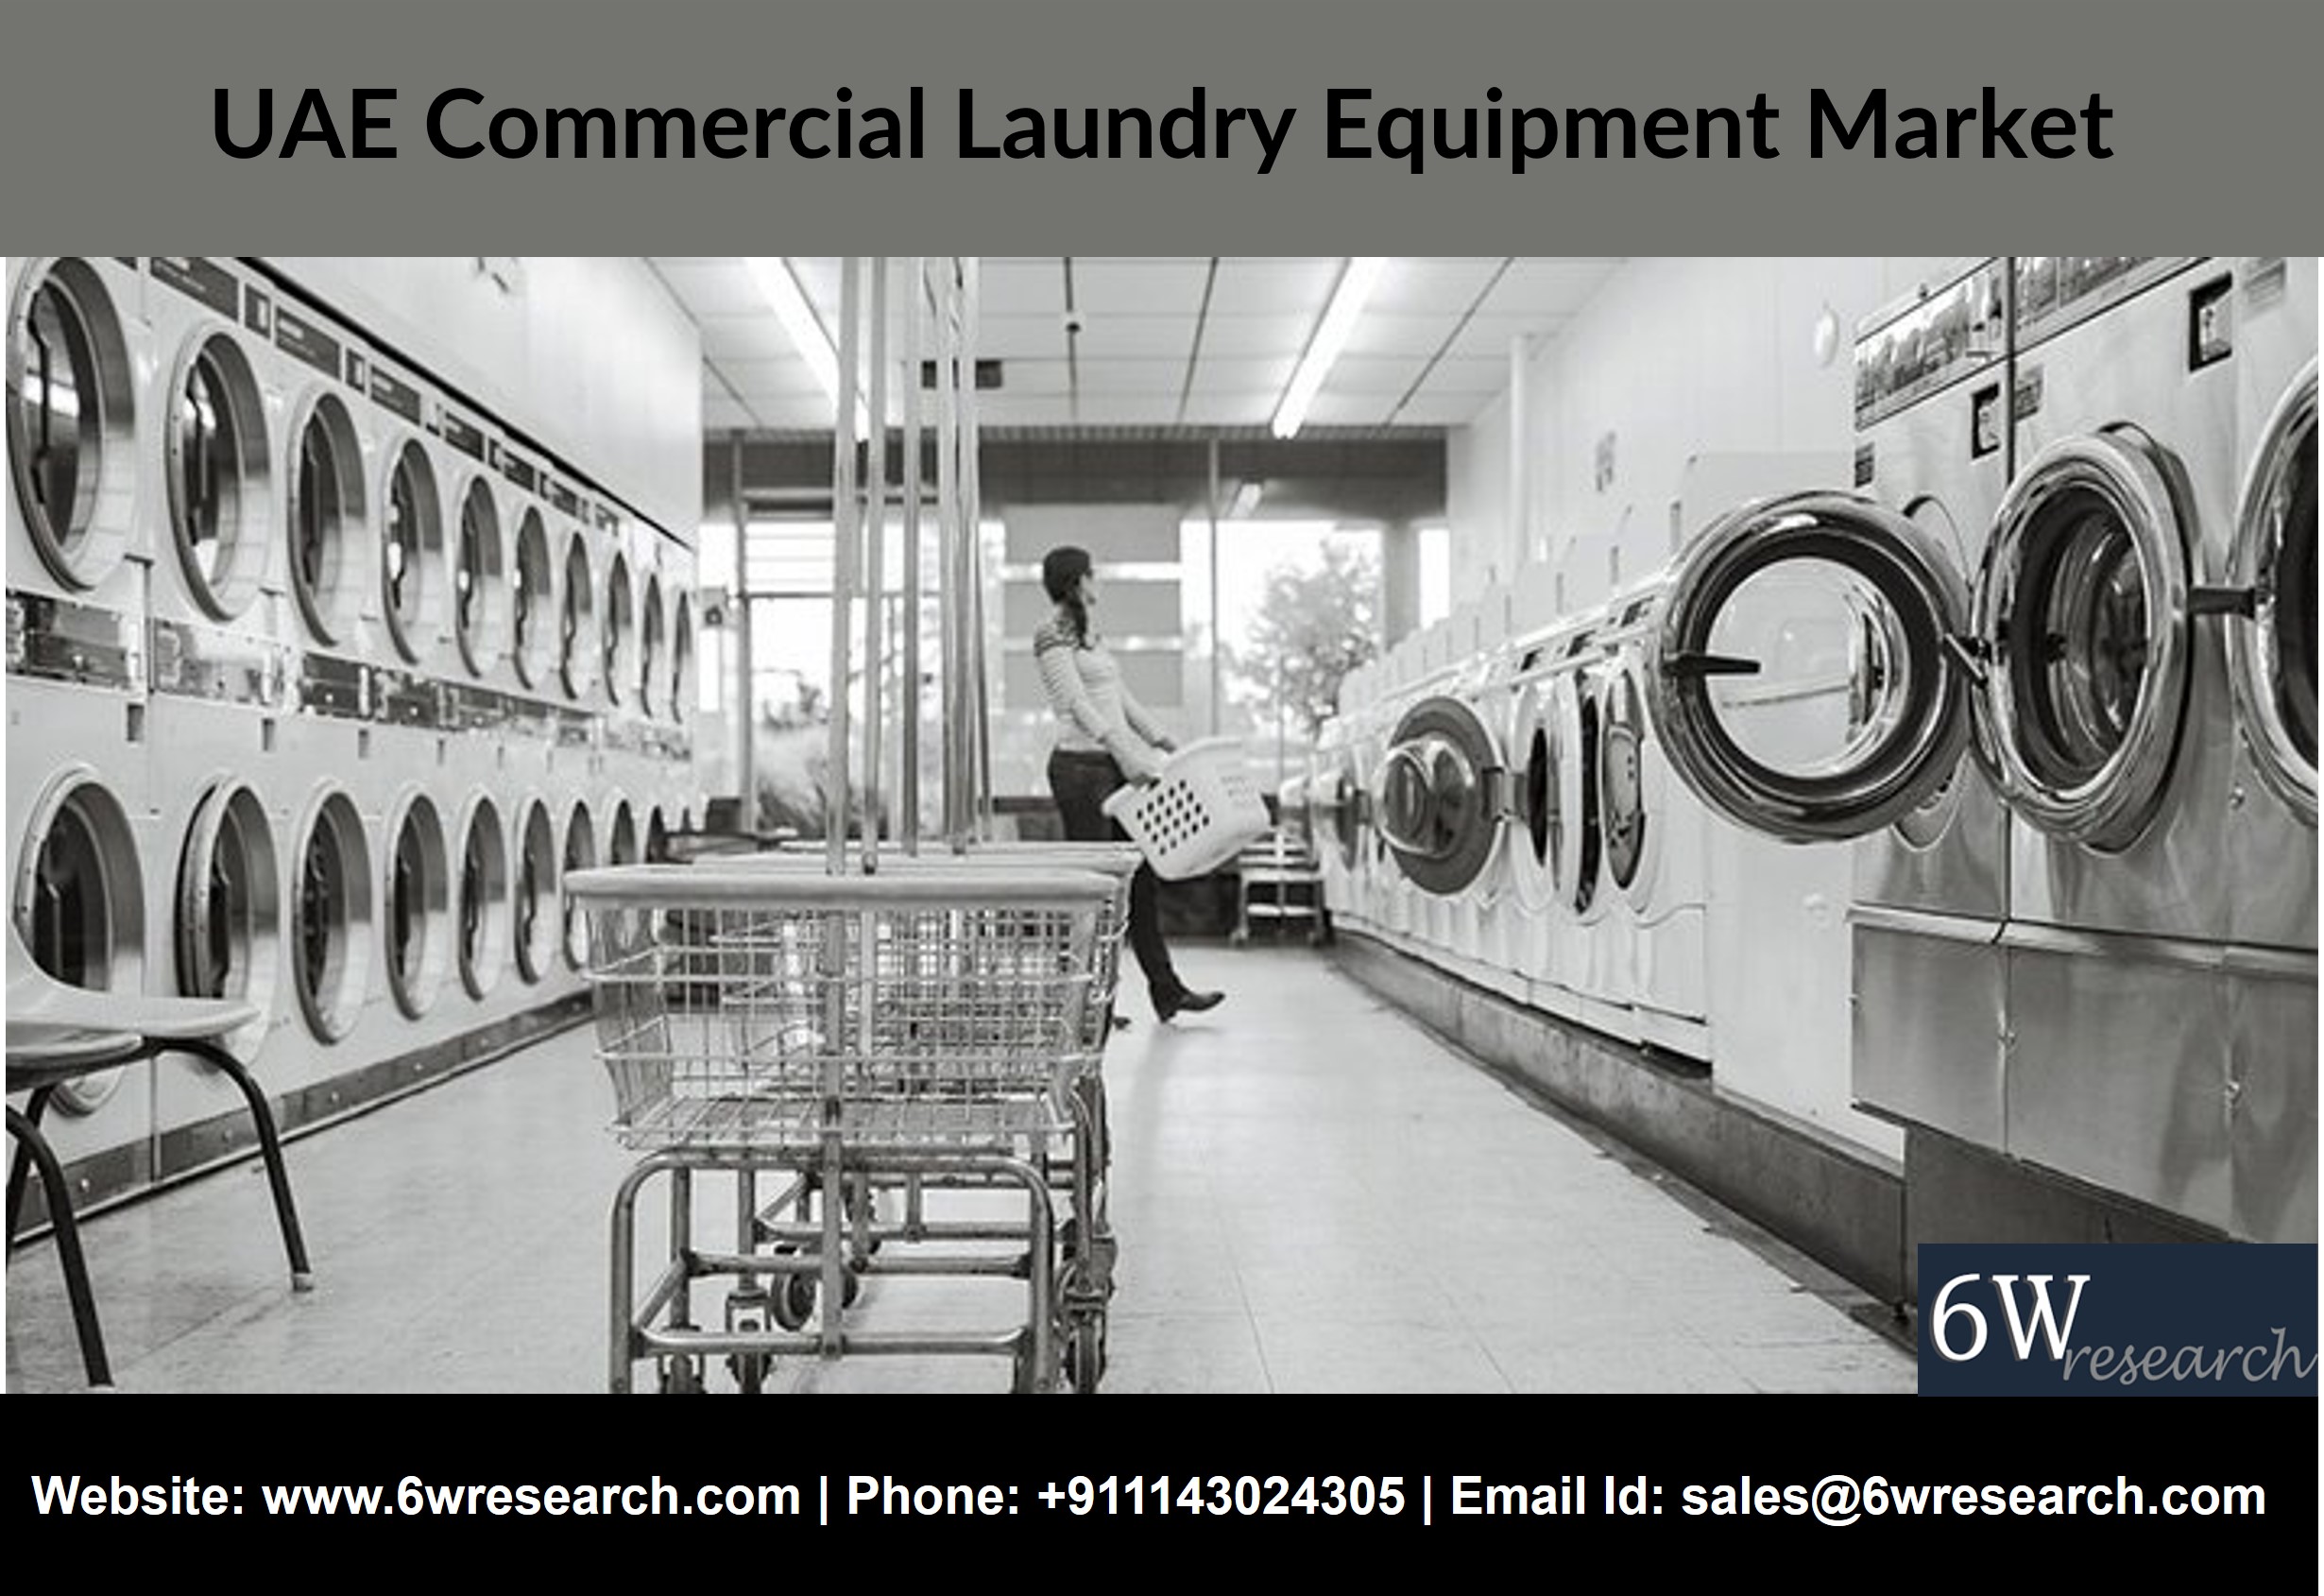 UAE Commercial Laundry Equipment Market